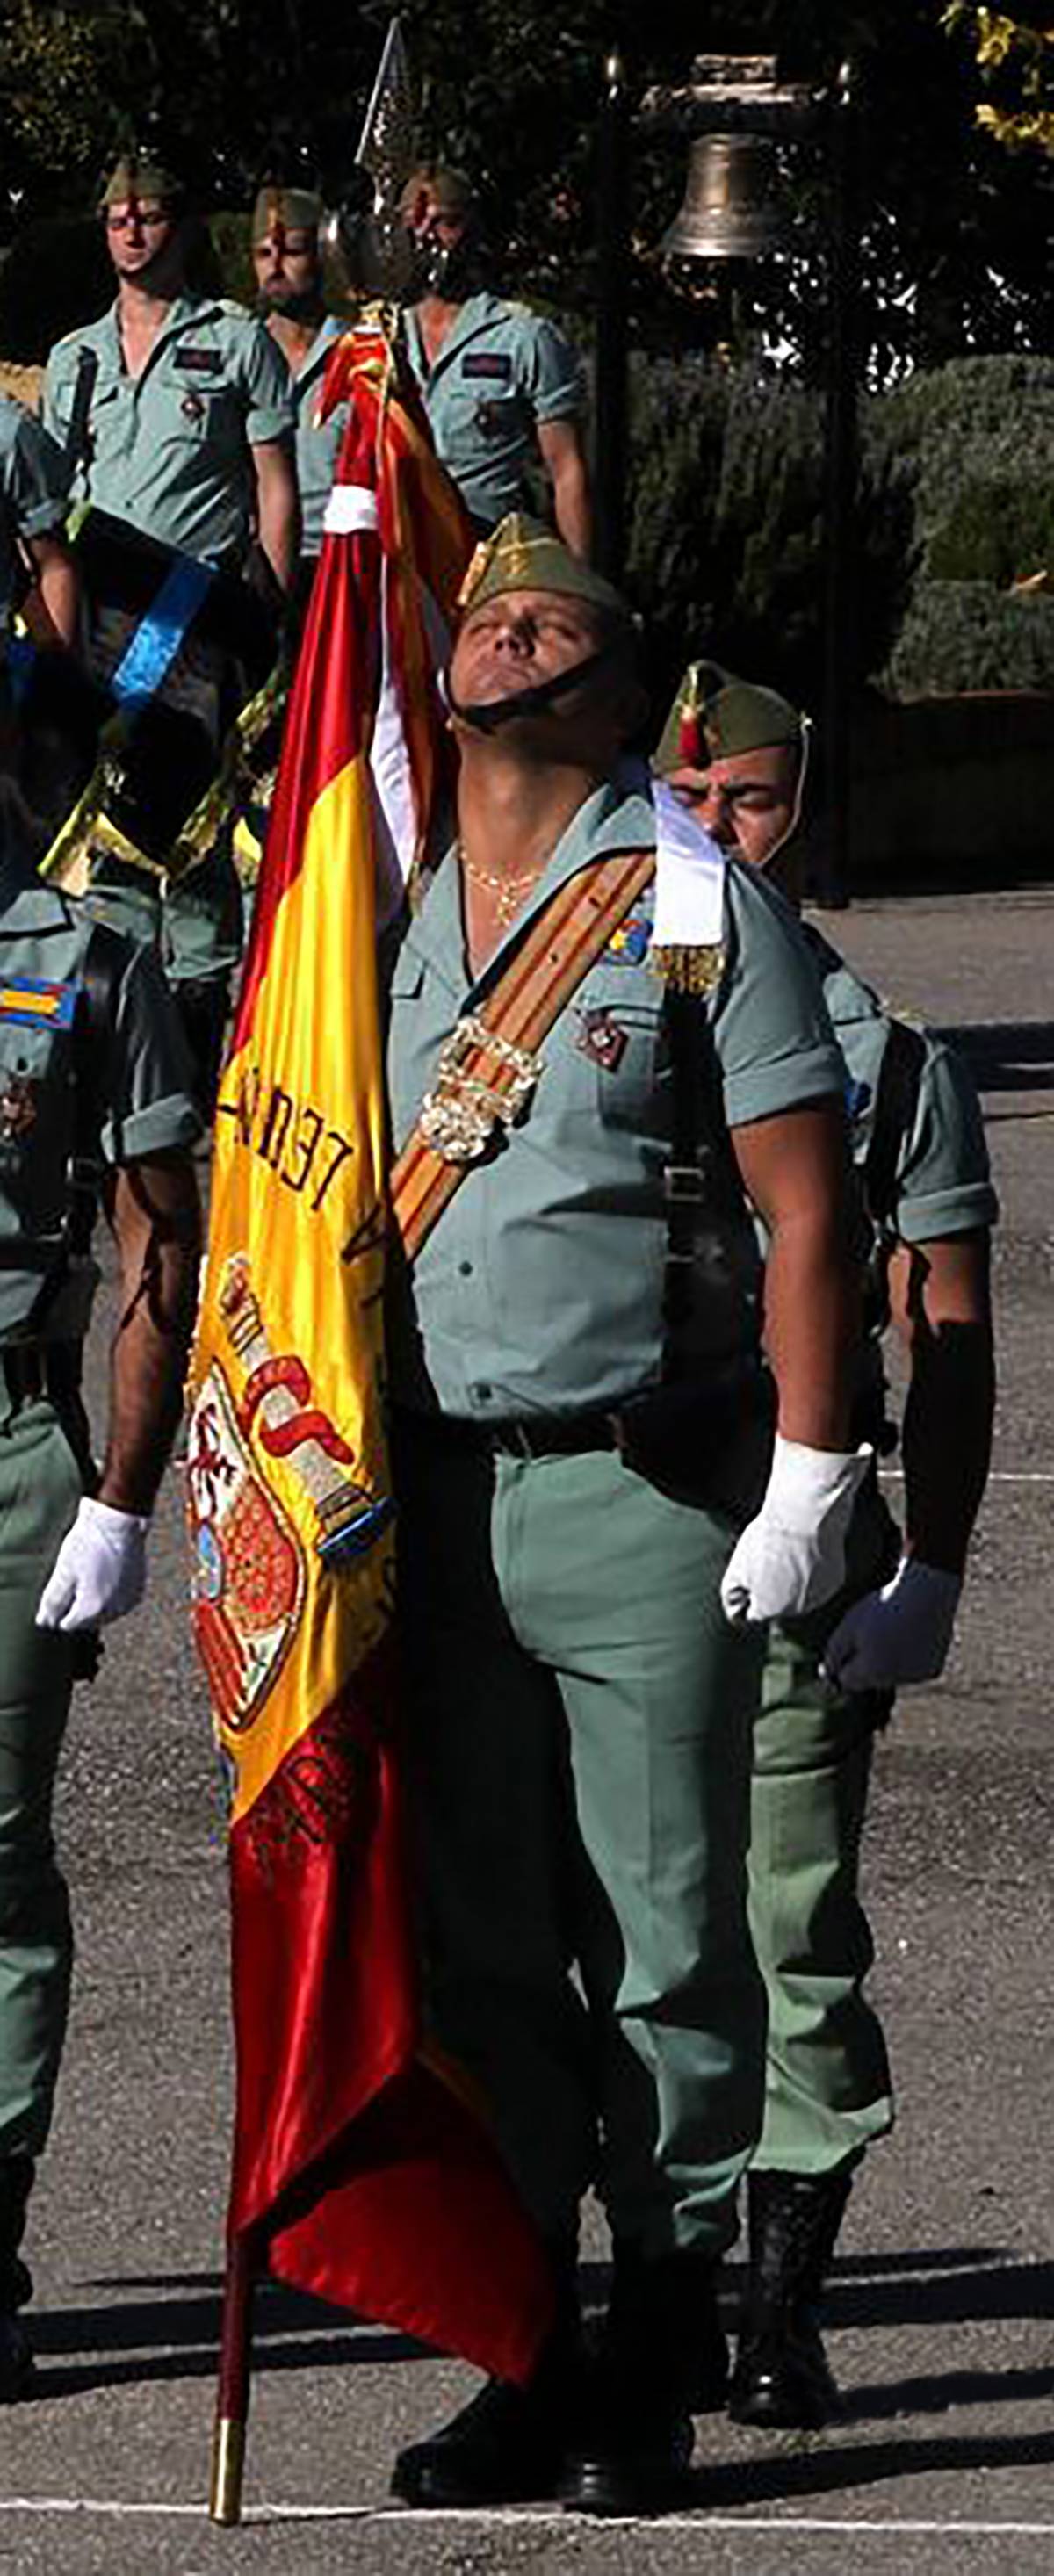 La Legione degli obesi. La fanteria spagnola messa a yogurt e tisane